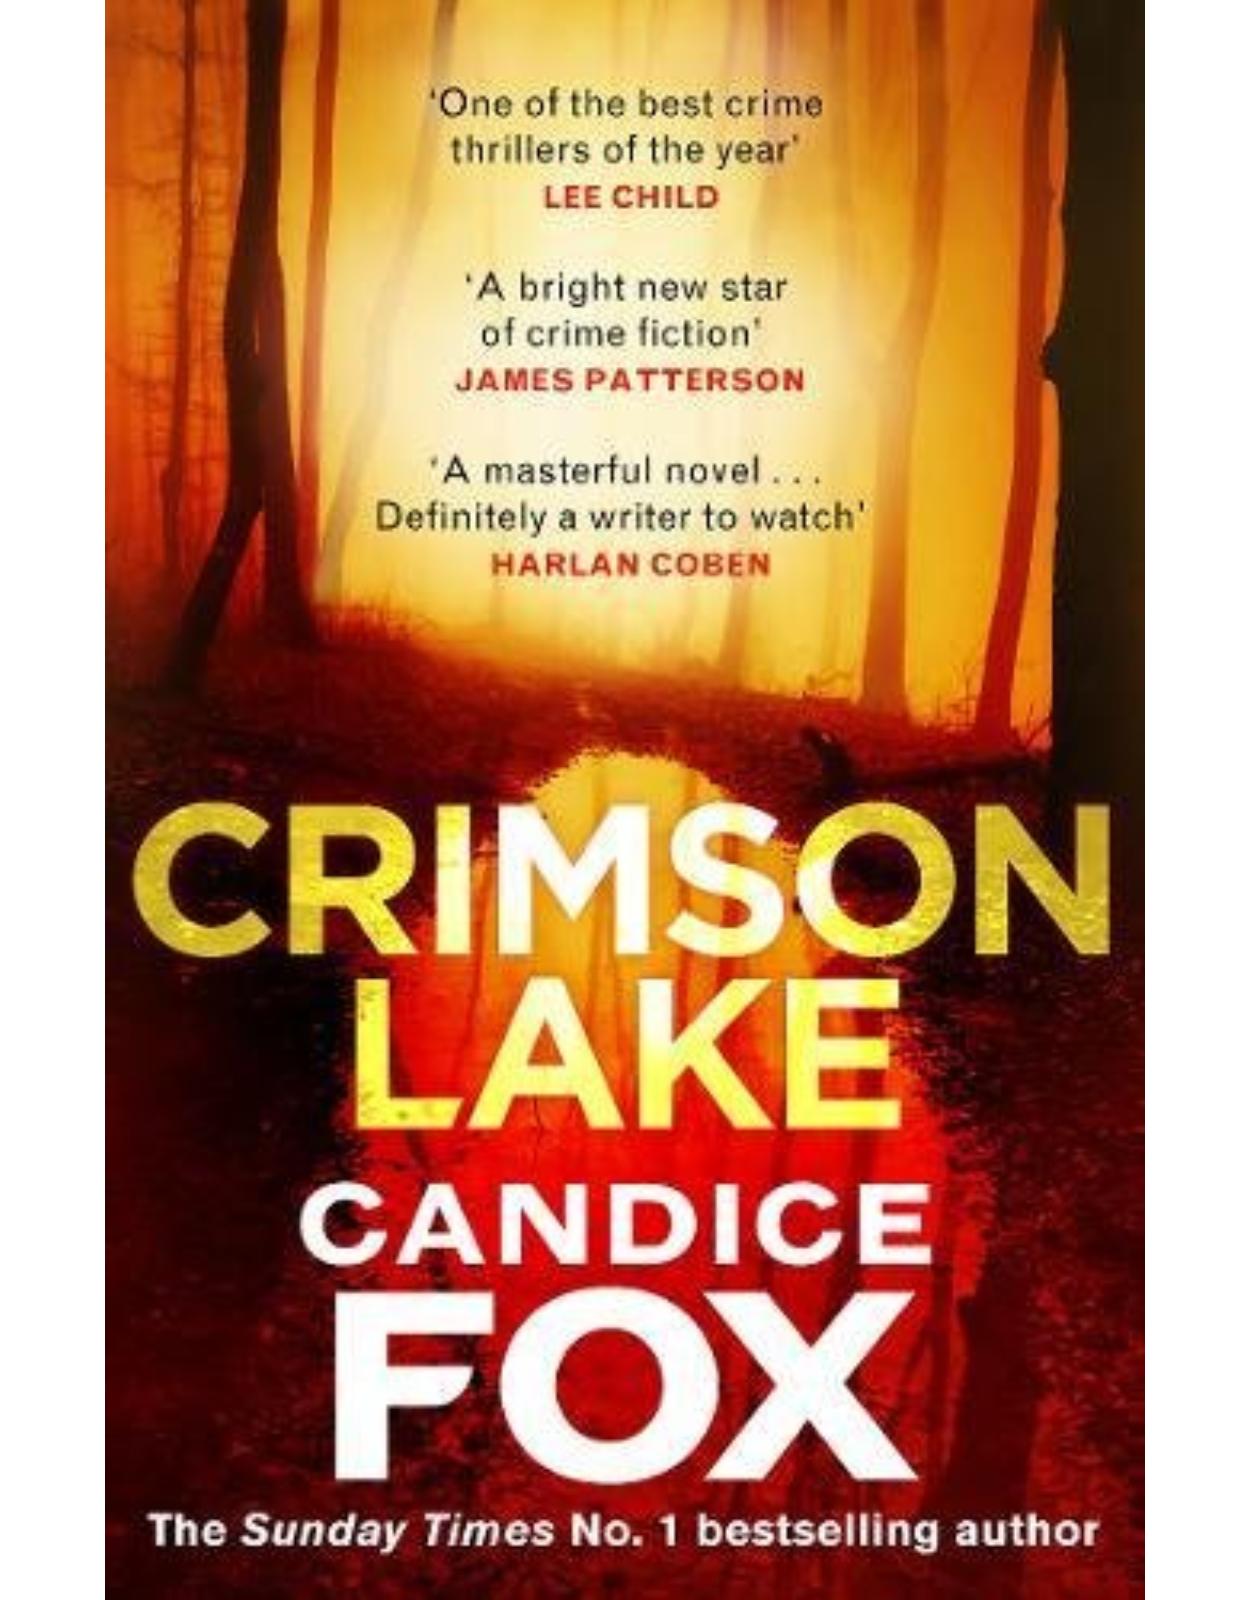 Crimson Lake (Crimson Lake Series)